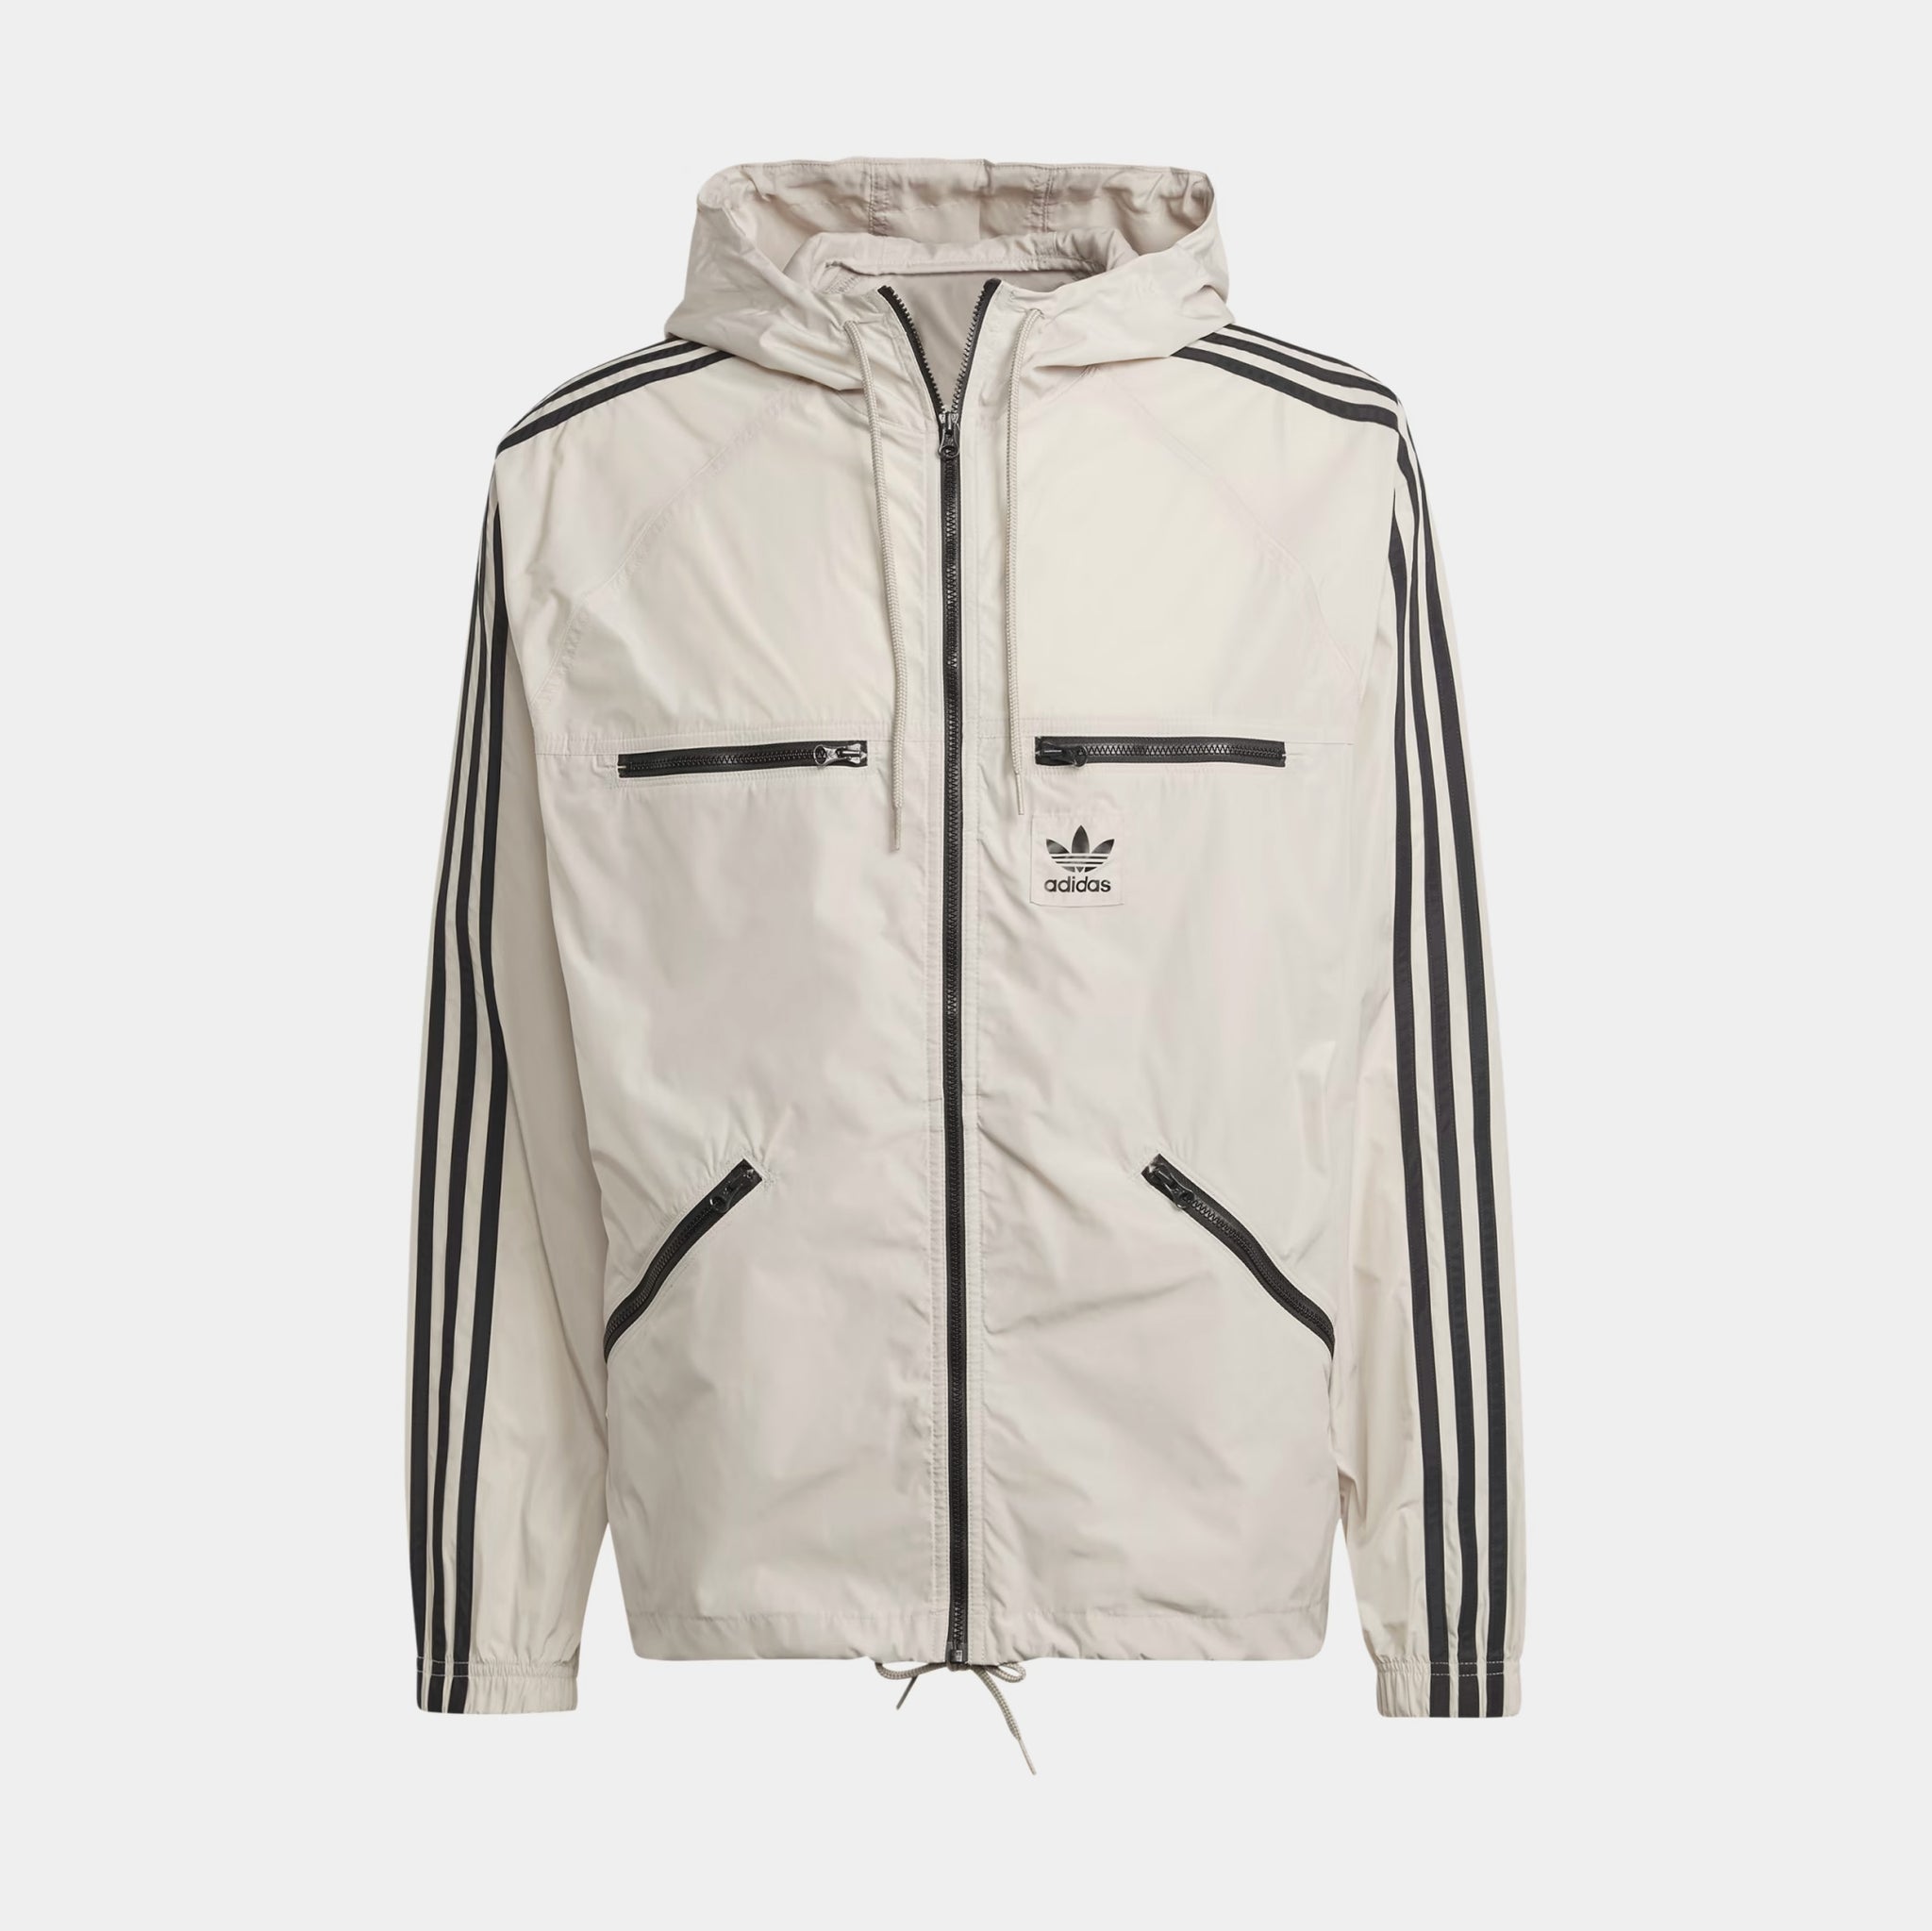 Should You Buy? Adidas Originals FireBird Track Jacket - YouTube